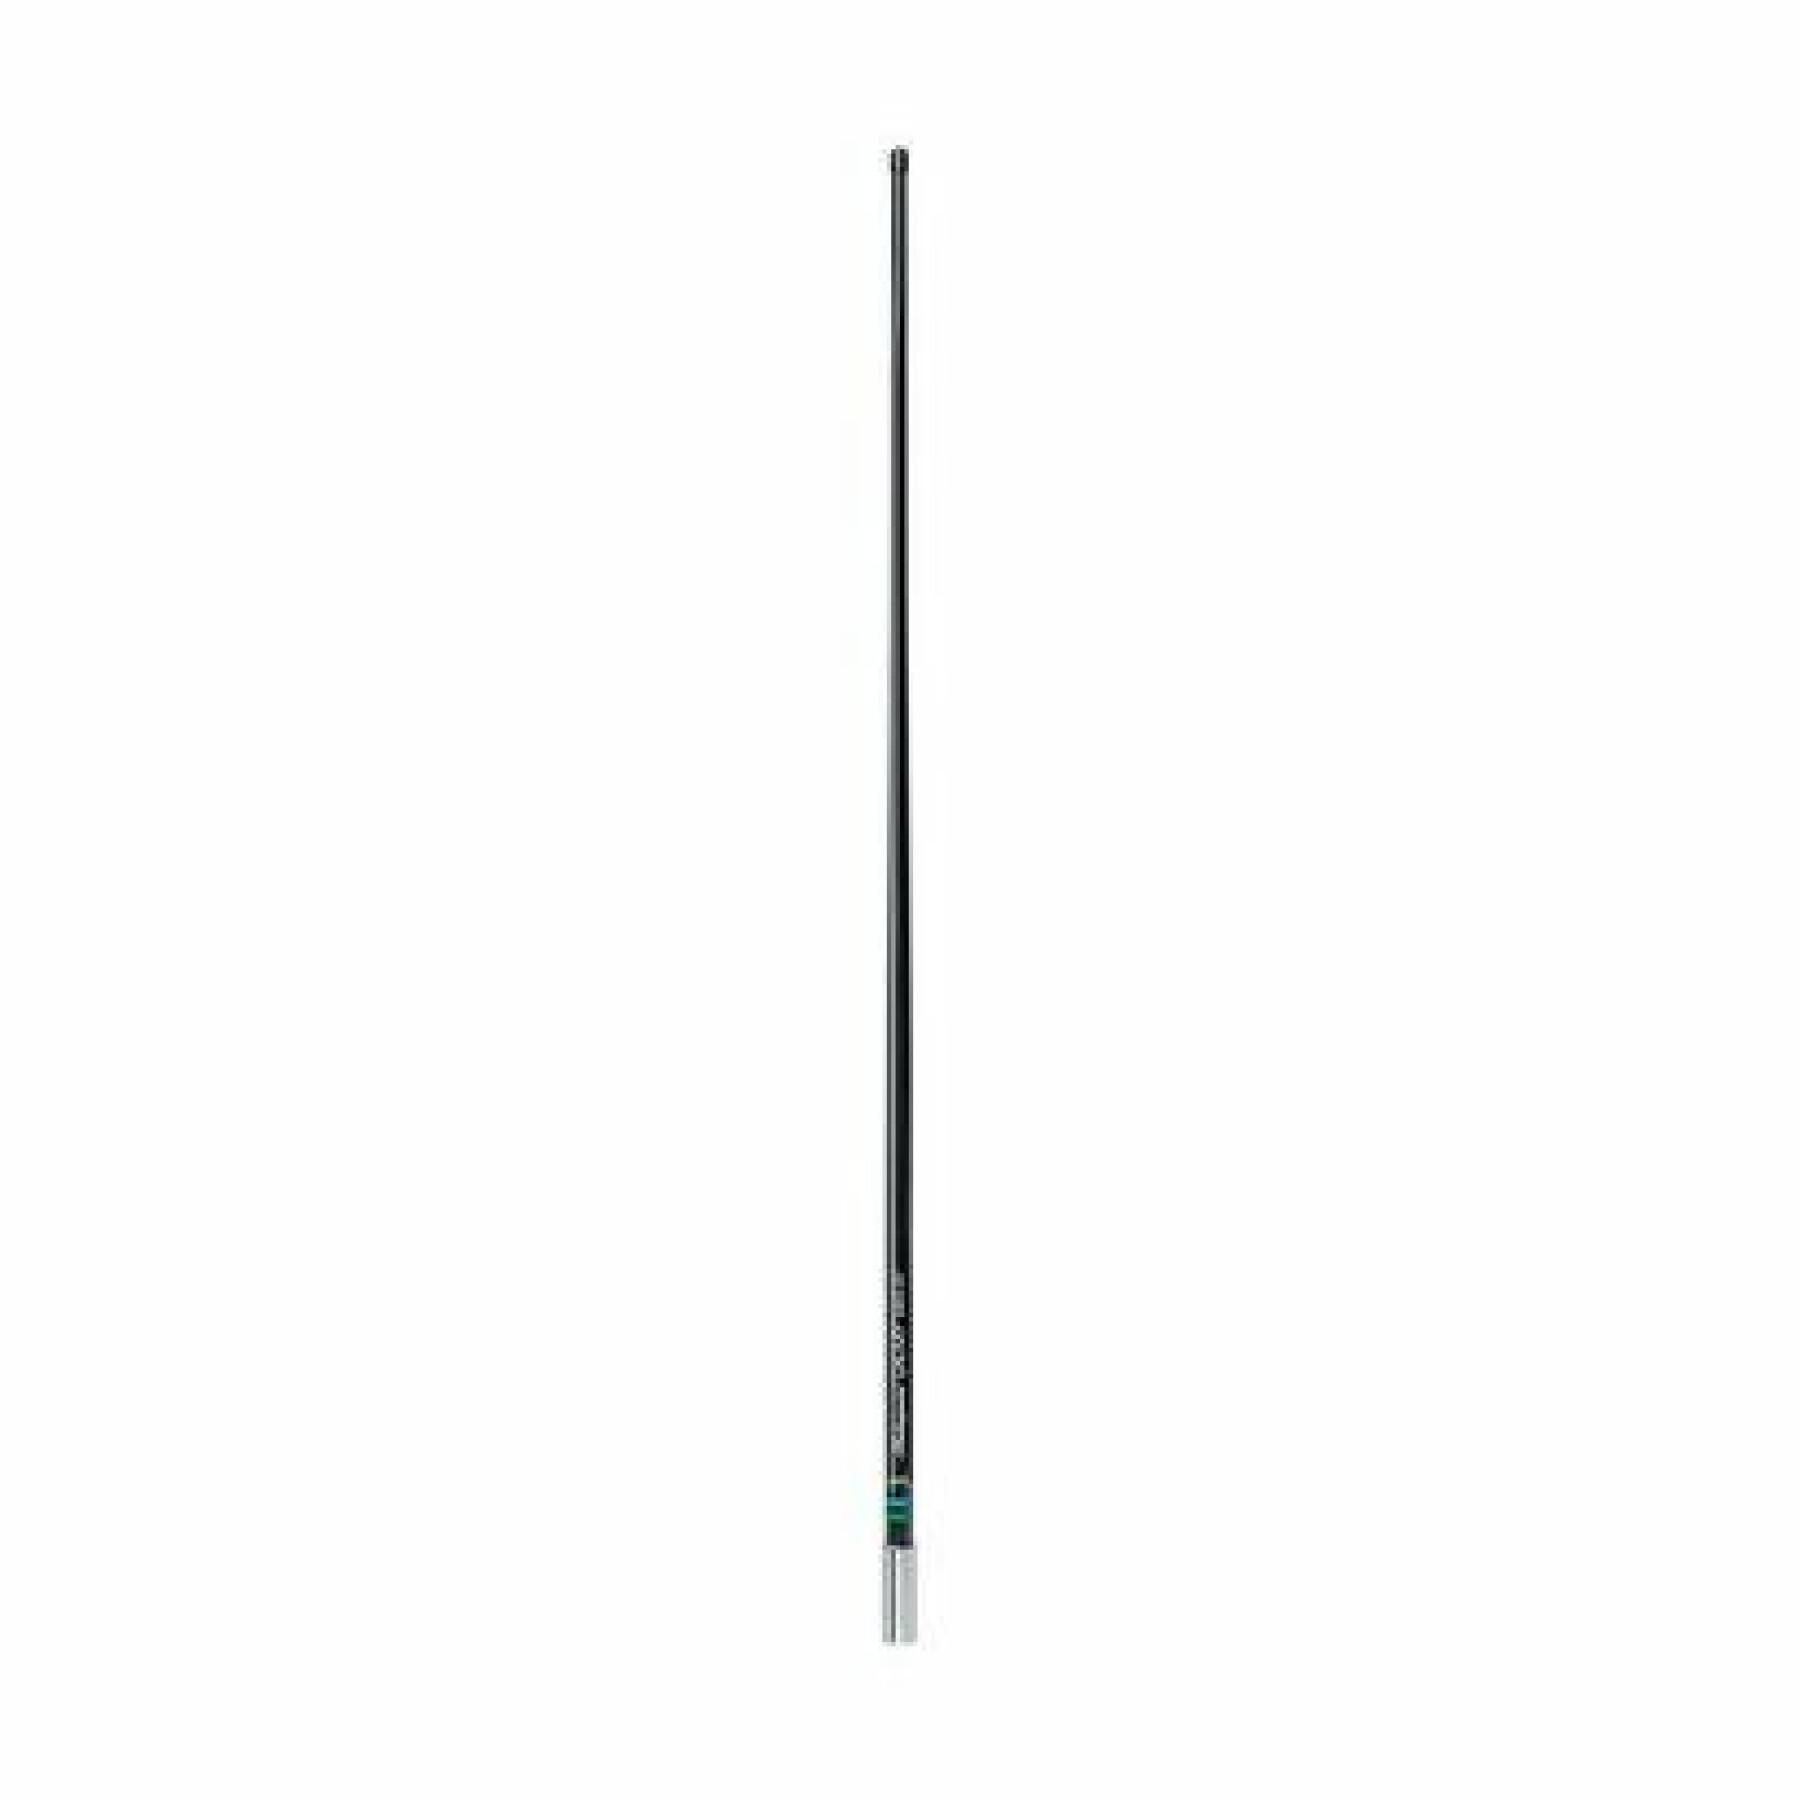 Antena de aço inoxidável ferrule antena Shakespeare VHF Galaxy 3dB – 1,2m - RG 8X+PL259